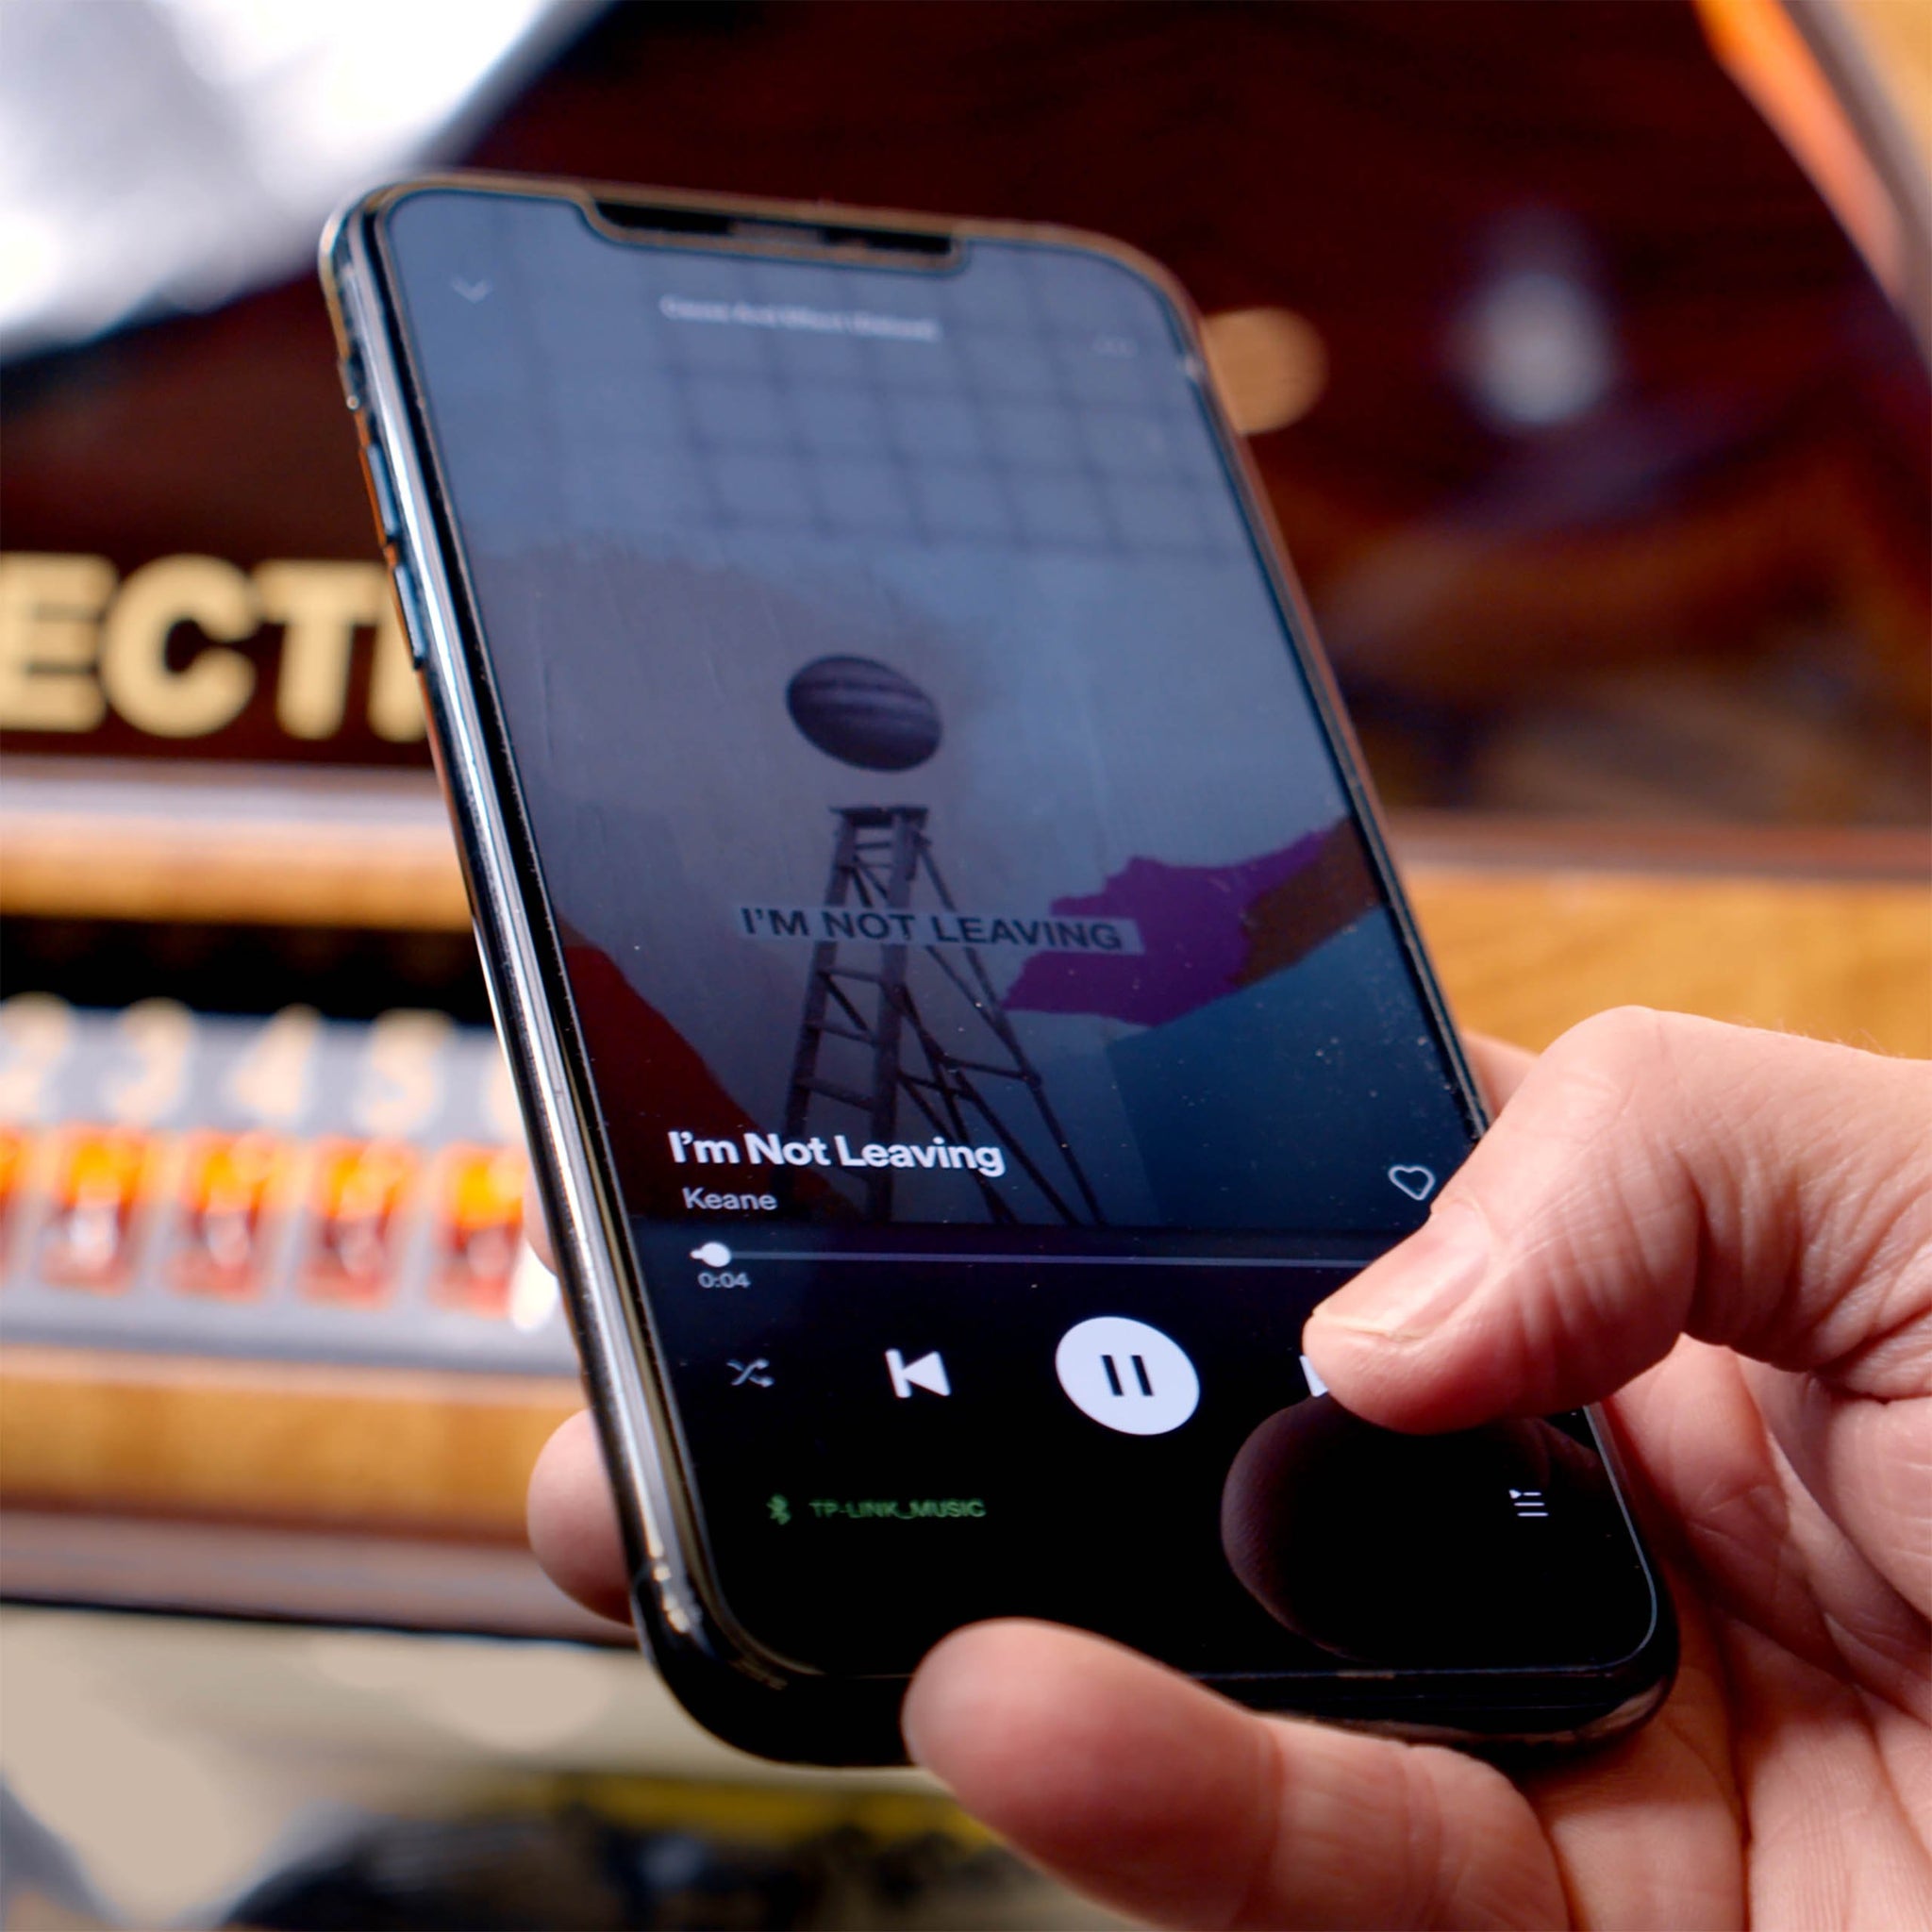 Rock-Ola Digital Music Center Jukebox in Light Oak with Bluetooth